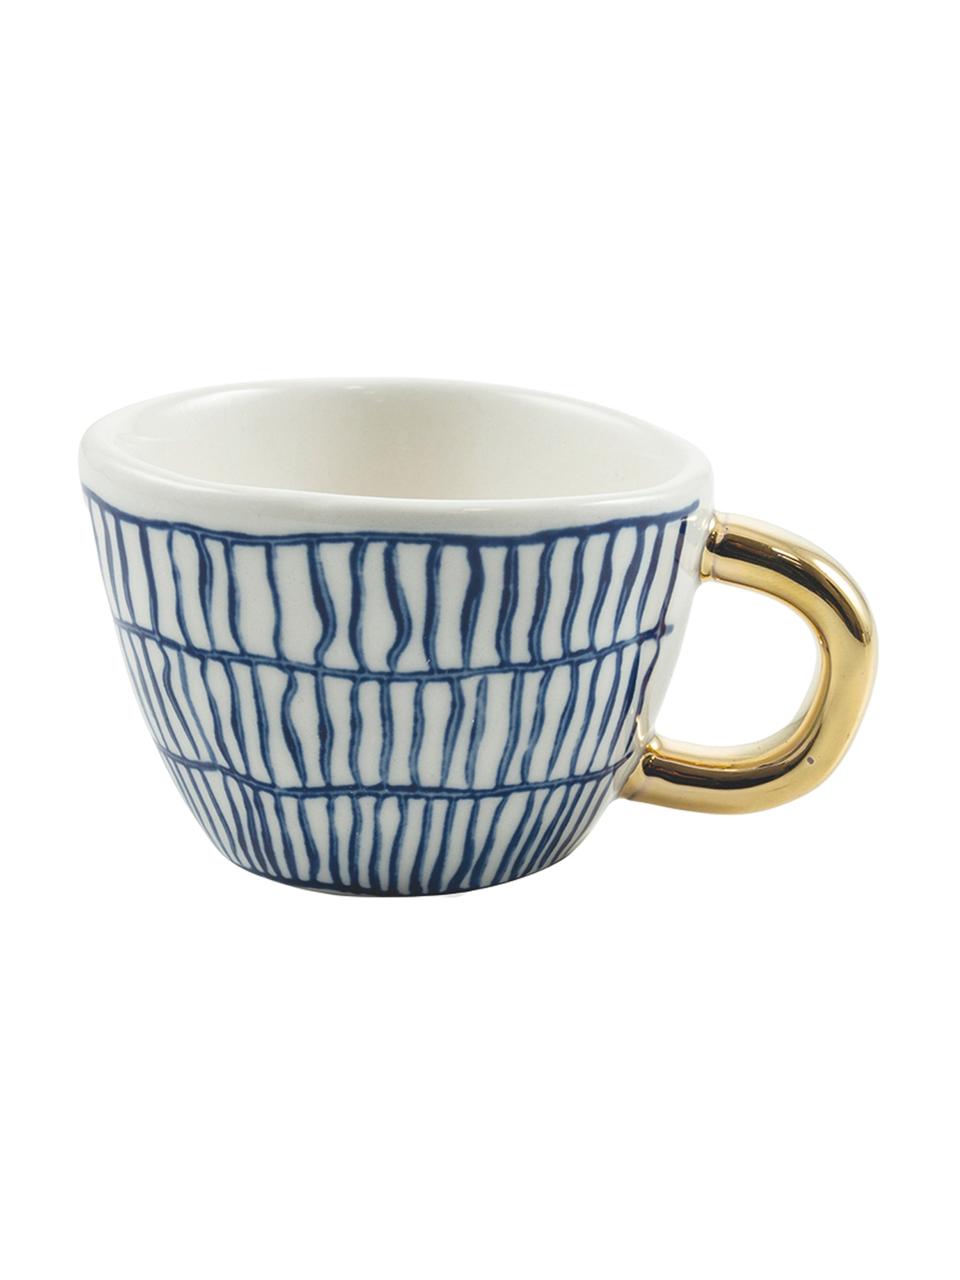 Koffiekopjes-set Masai, 6-delig, Keramiek, Blauw, wit, goudkleurig, Ø 7 x H 5 cm